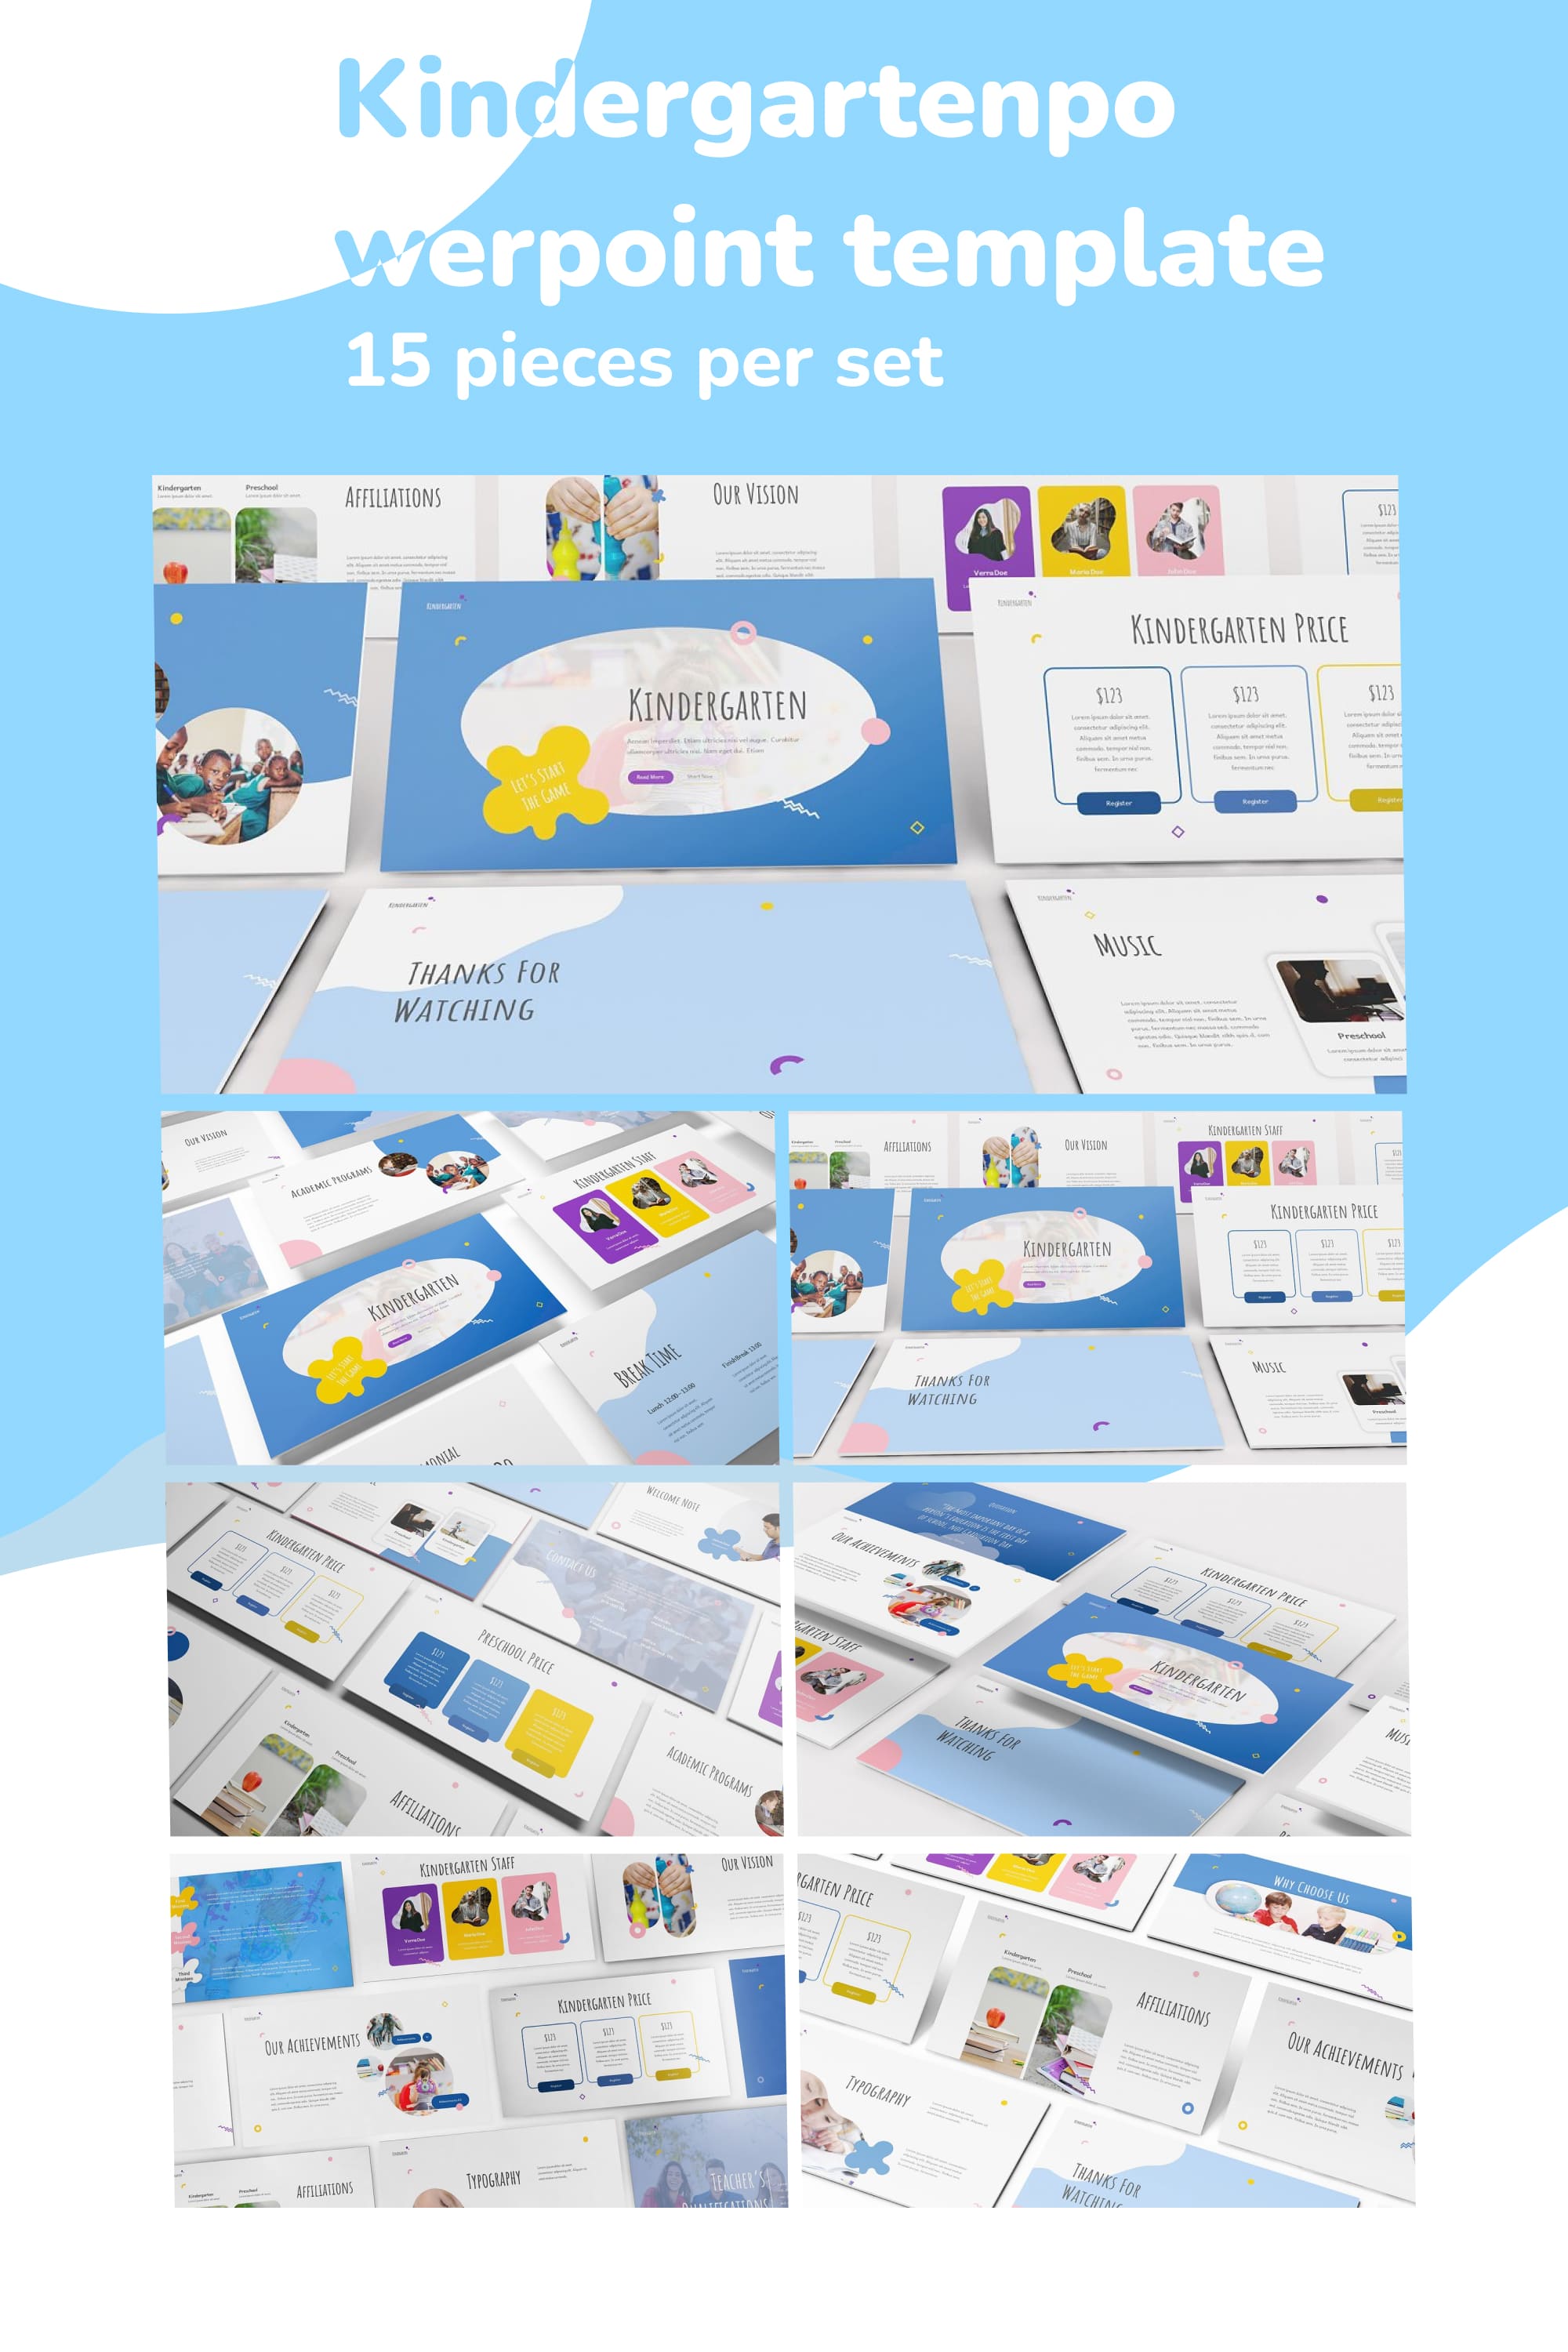 Kindergarten Powerpoint Template - preview of Pinterest image.